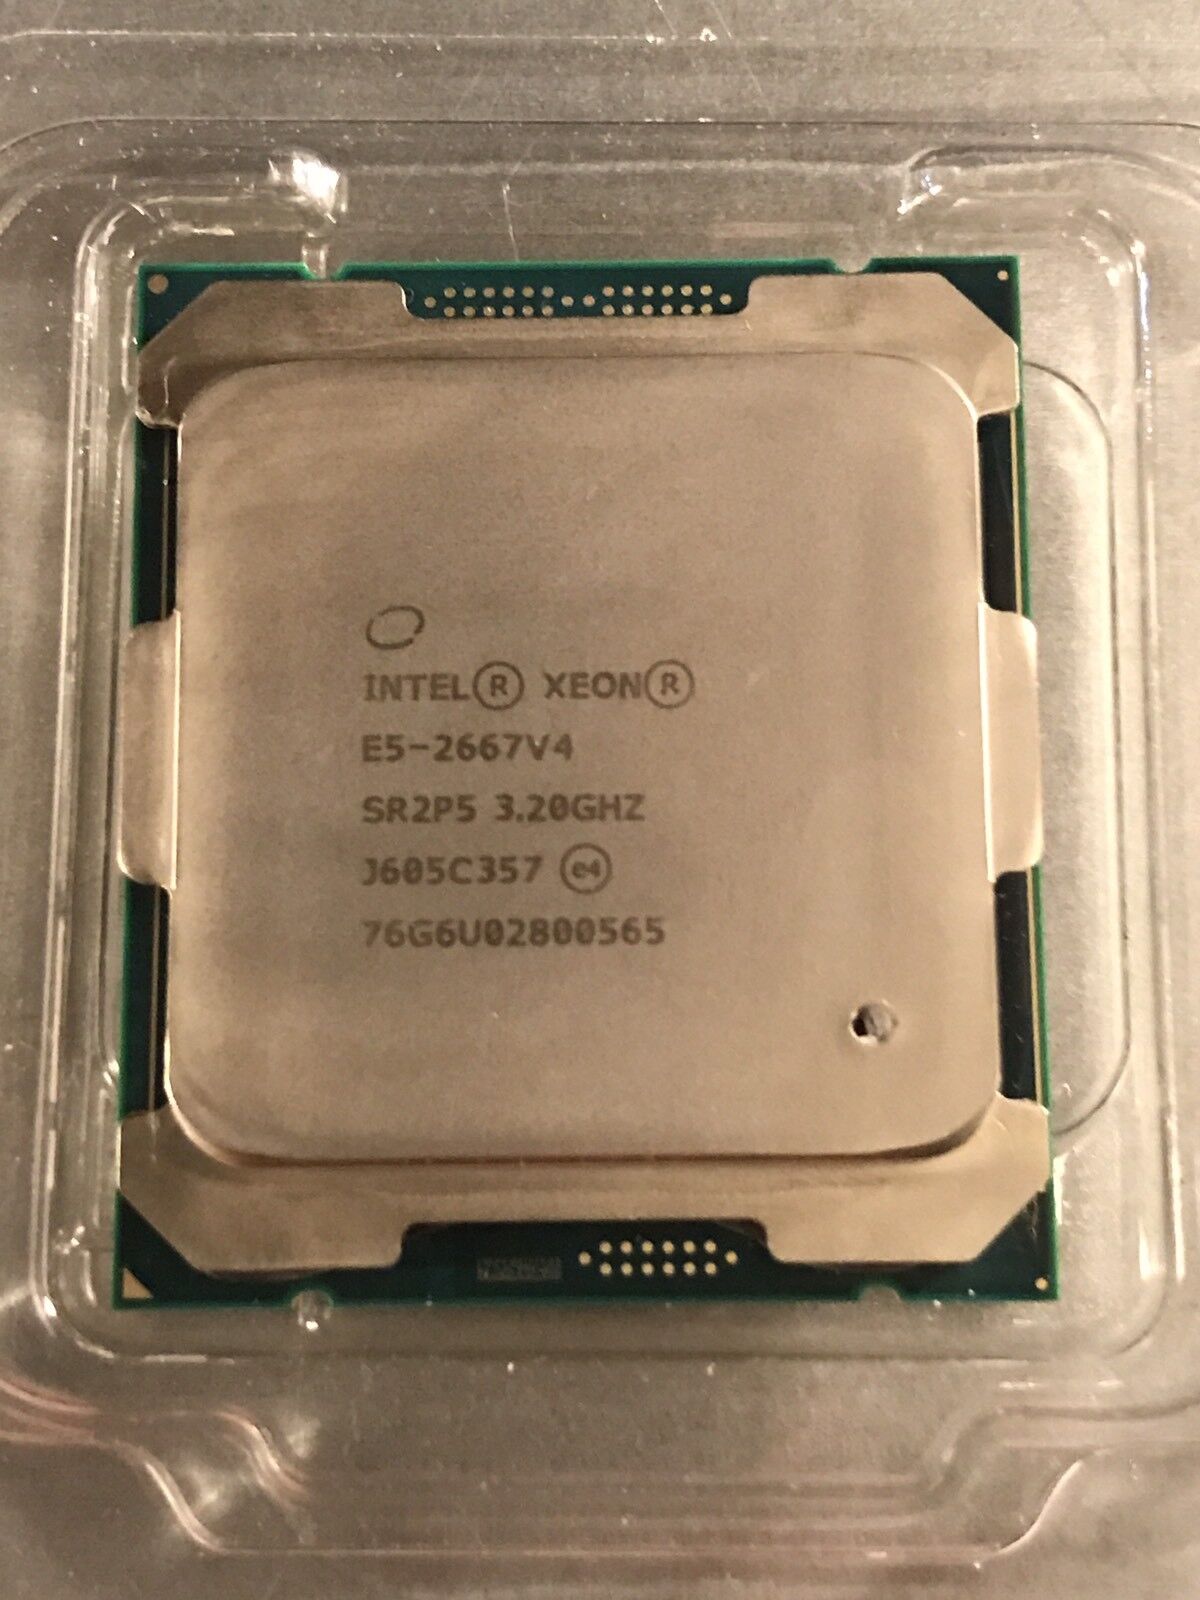 Lenovo x3550 M5 Intel Xeon E5-2667 V4 CPU 3.2GHz+Heatsink 00FK456+2xFans 00KC800.